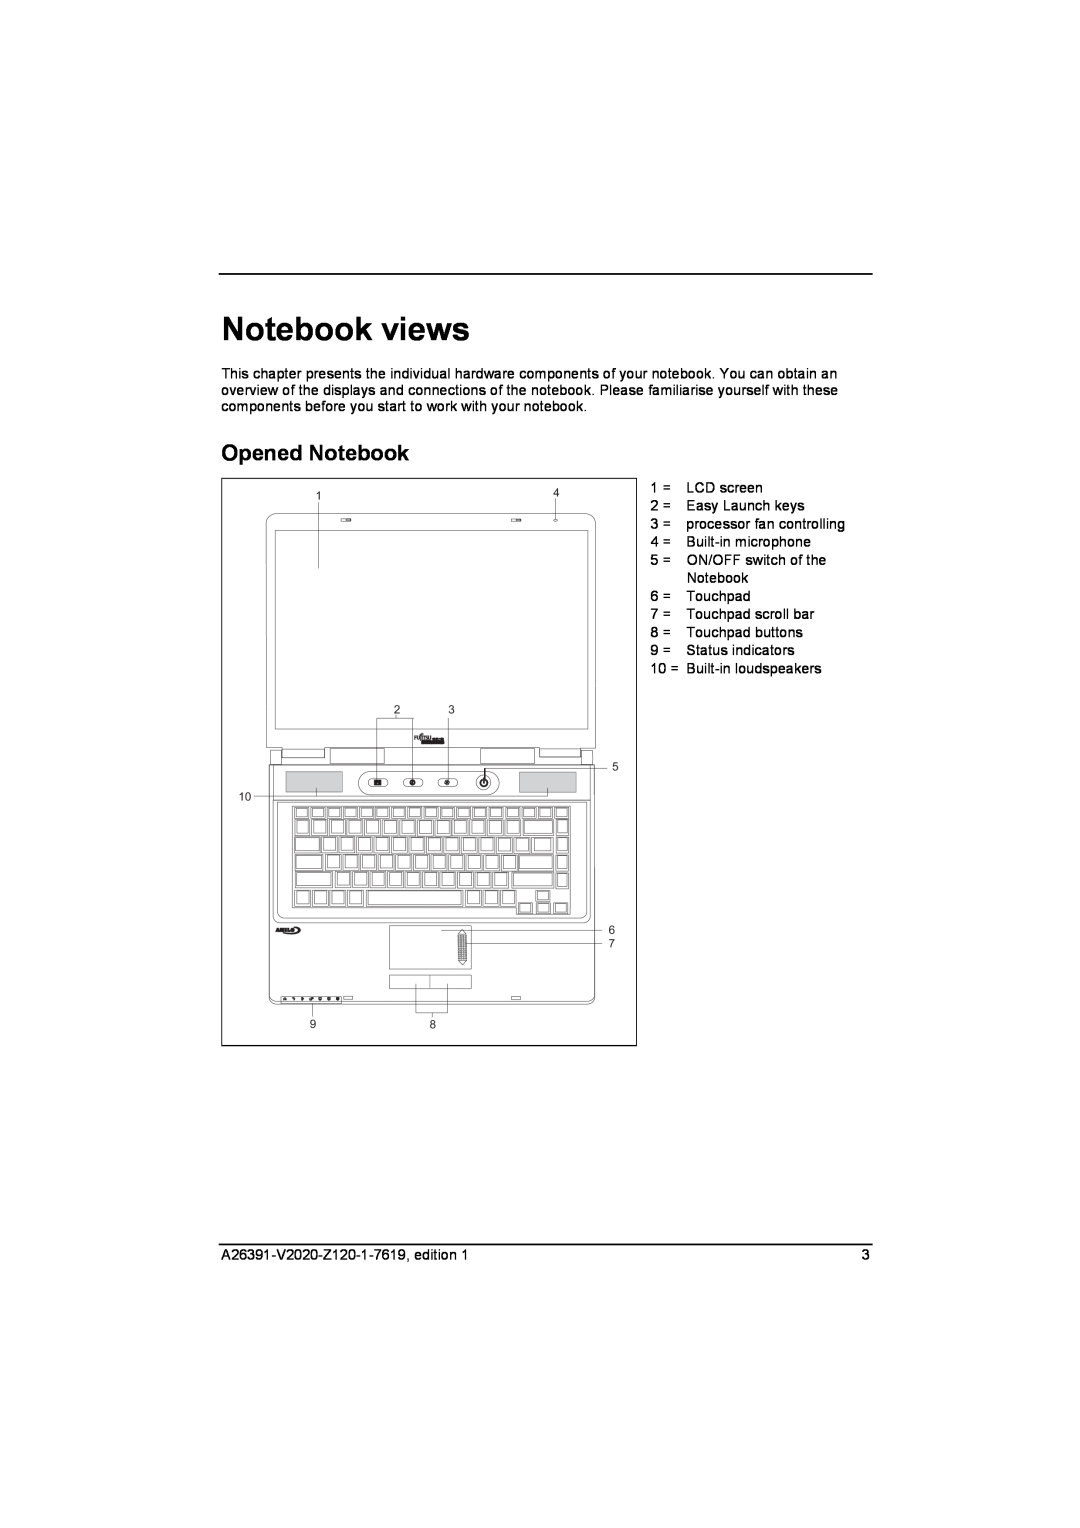 Fujitsu Siemens Computers V2020 manual Notebook views, Opened Notebook 